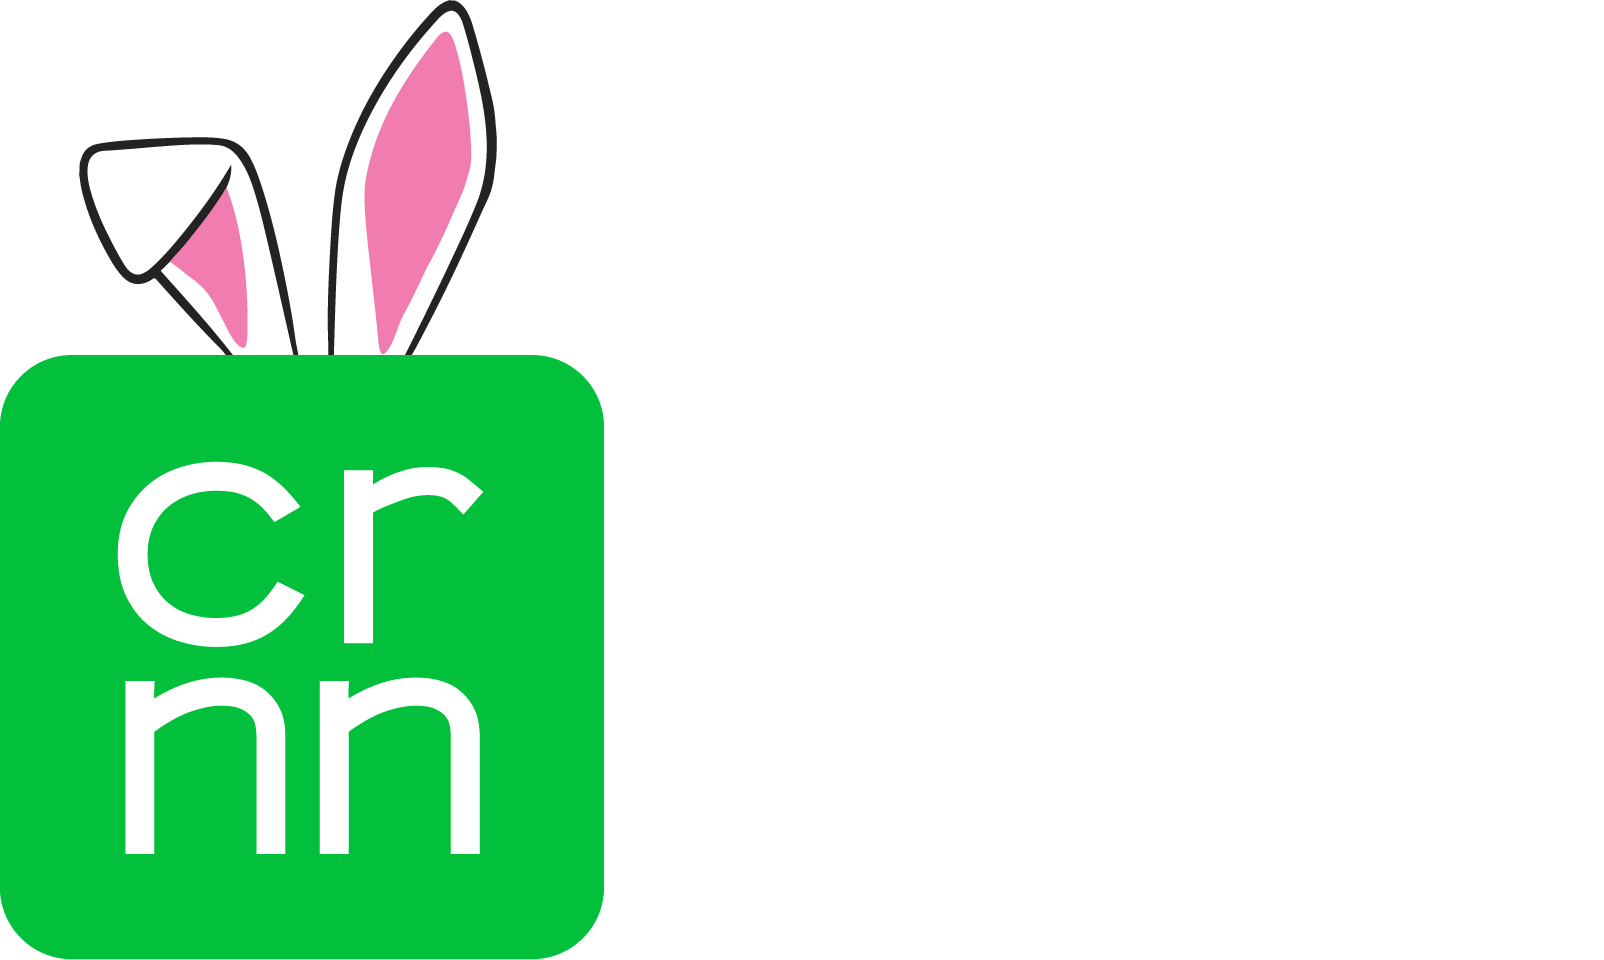 cronn easter logo